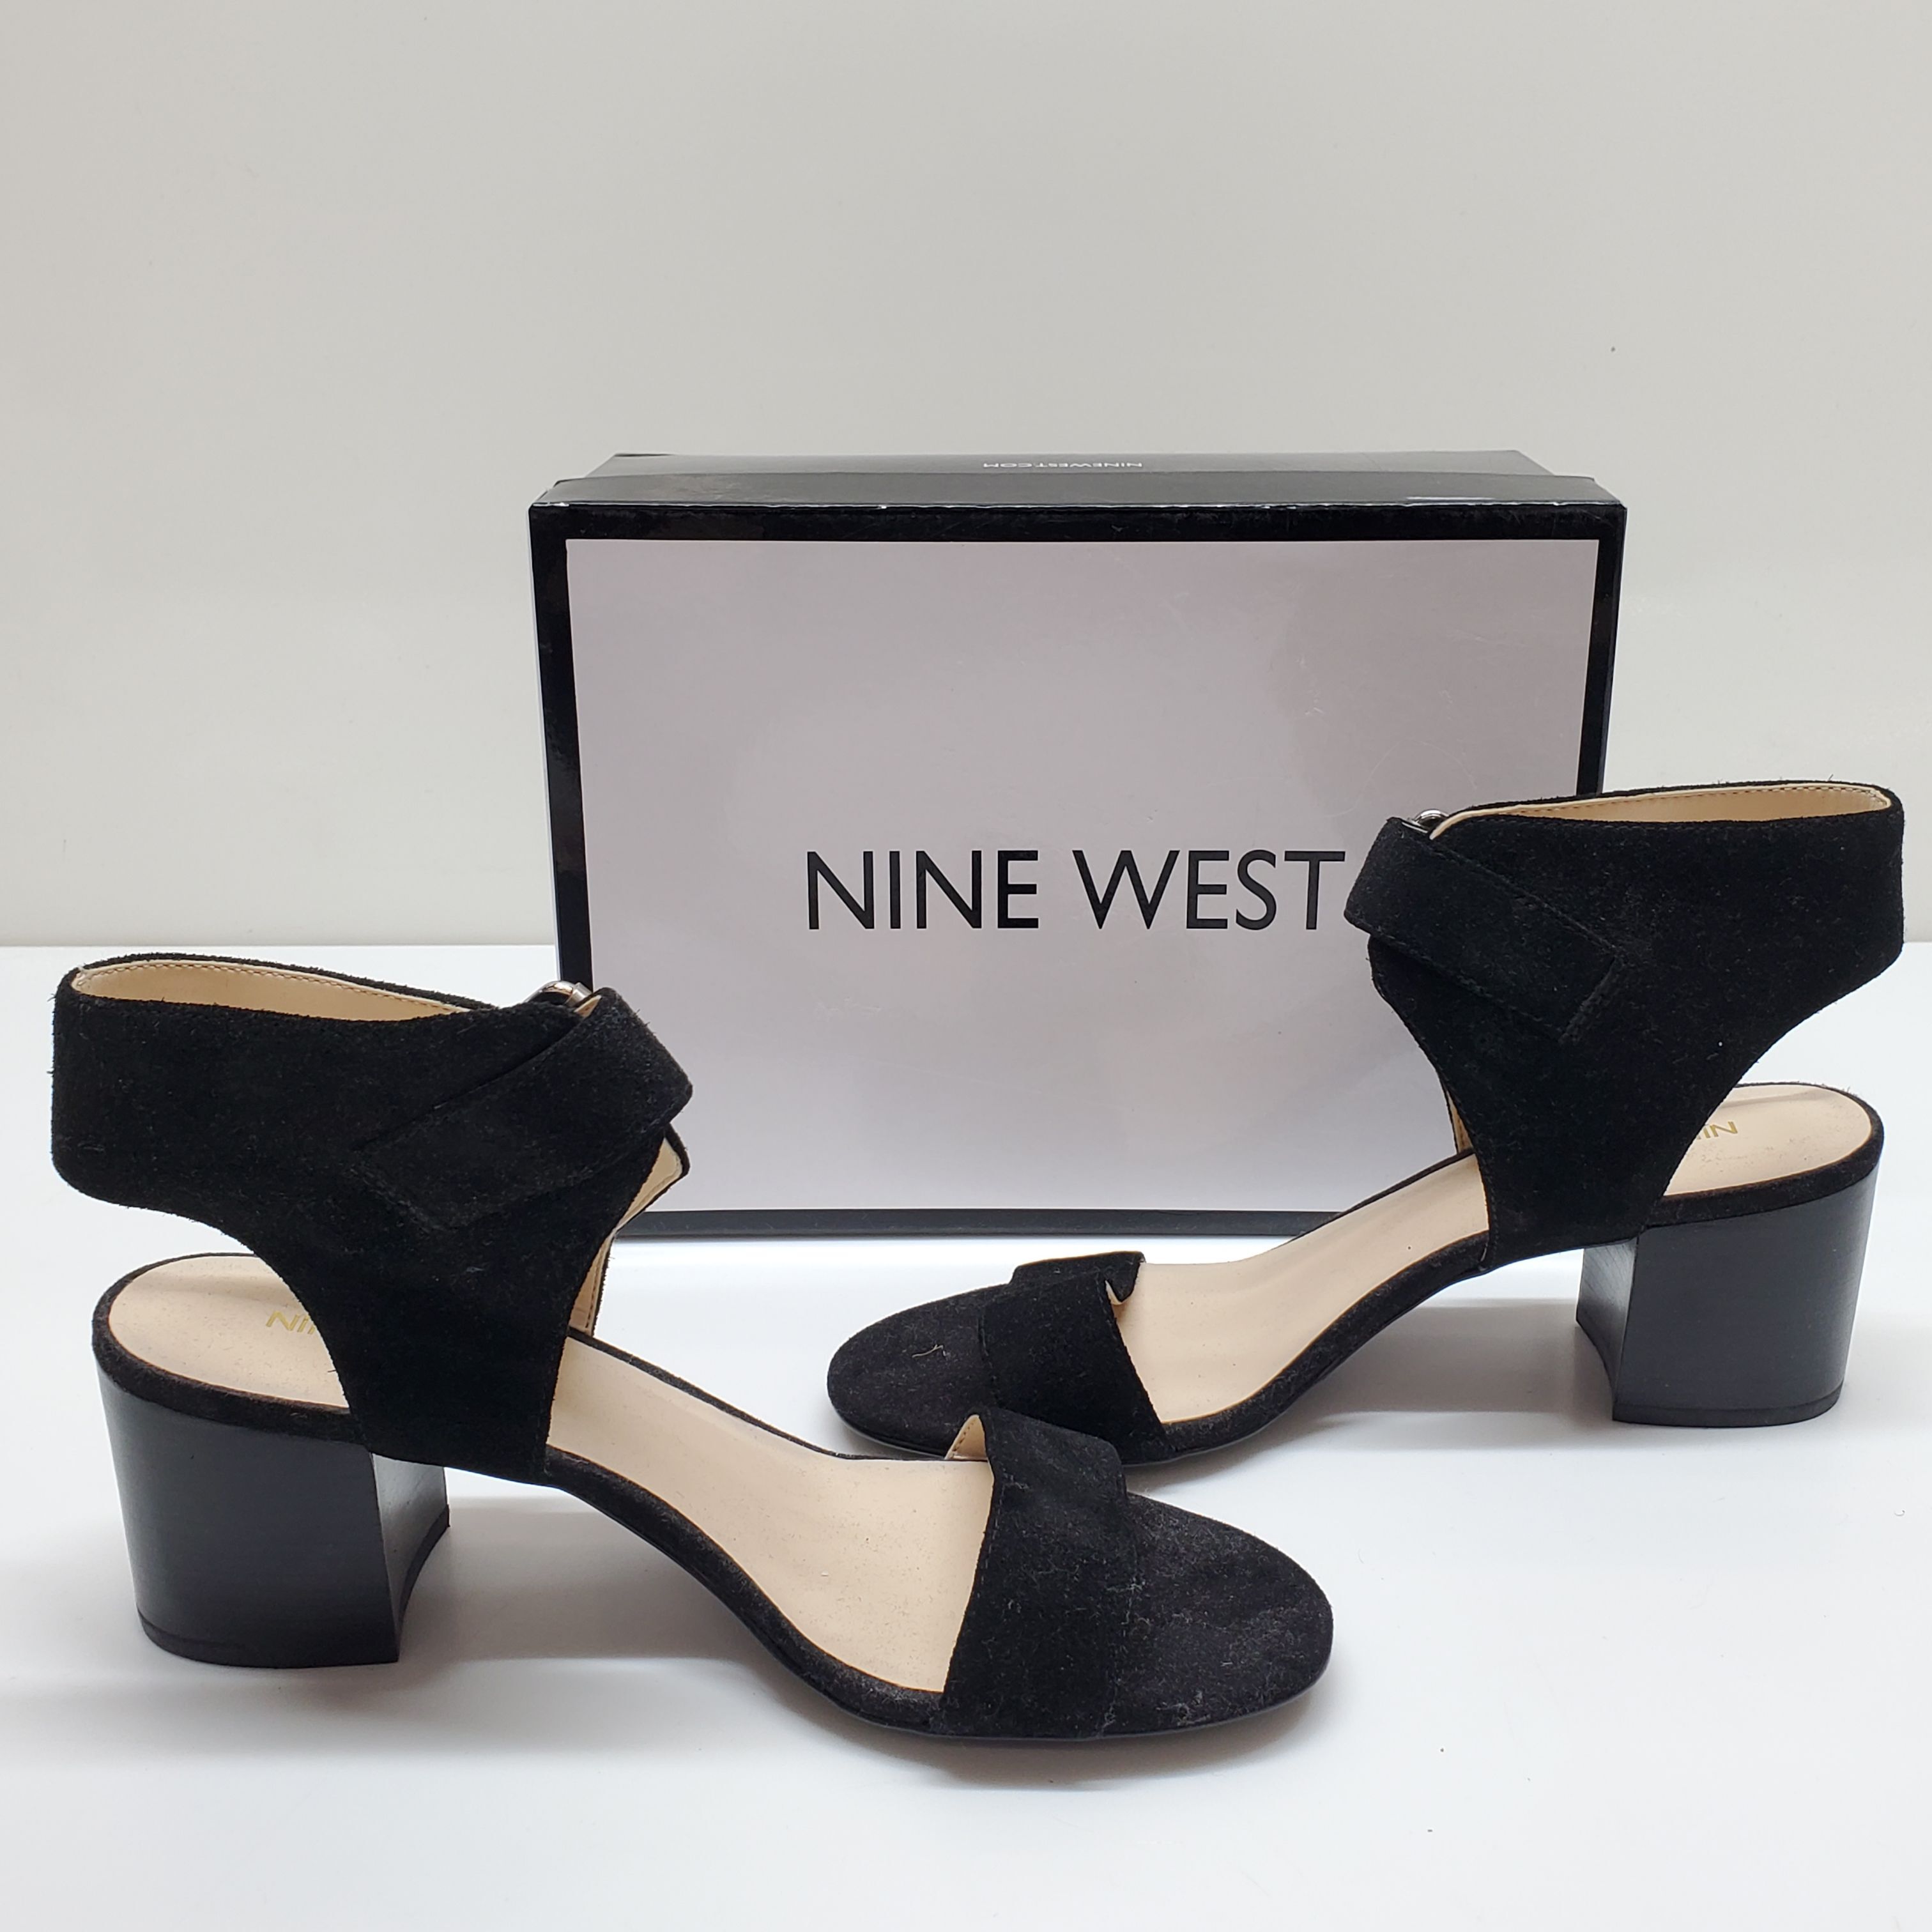 Nine West Sandy Women's Block Heel Sandals Silver. | eBay